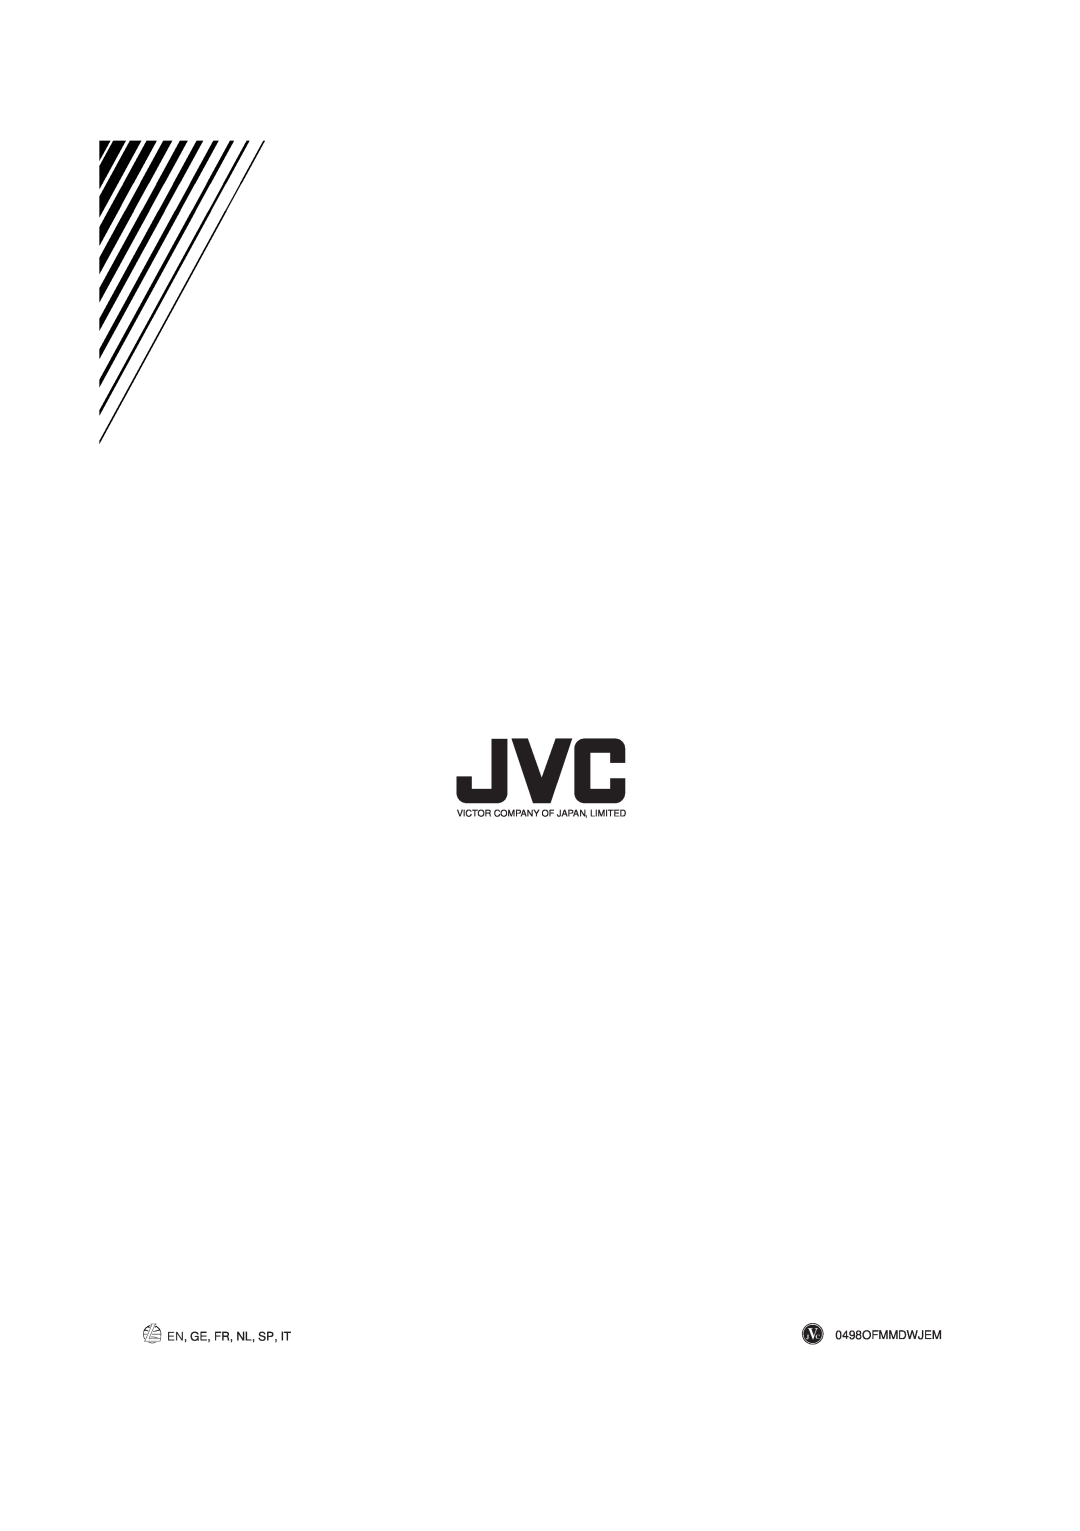 JVC RX-884RBK manual En, Ge, Fr, Nl, Sp, It, 0498OFMMDWJEM, Victor Company Of Japan, Limited 